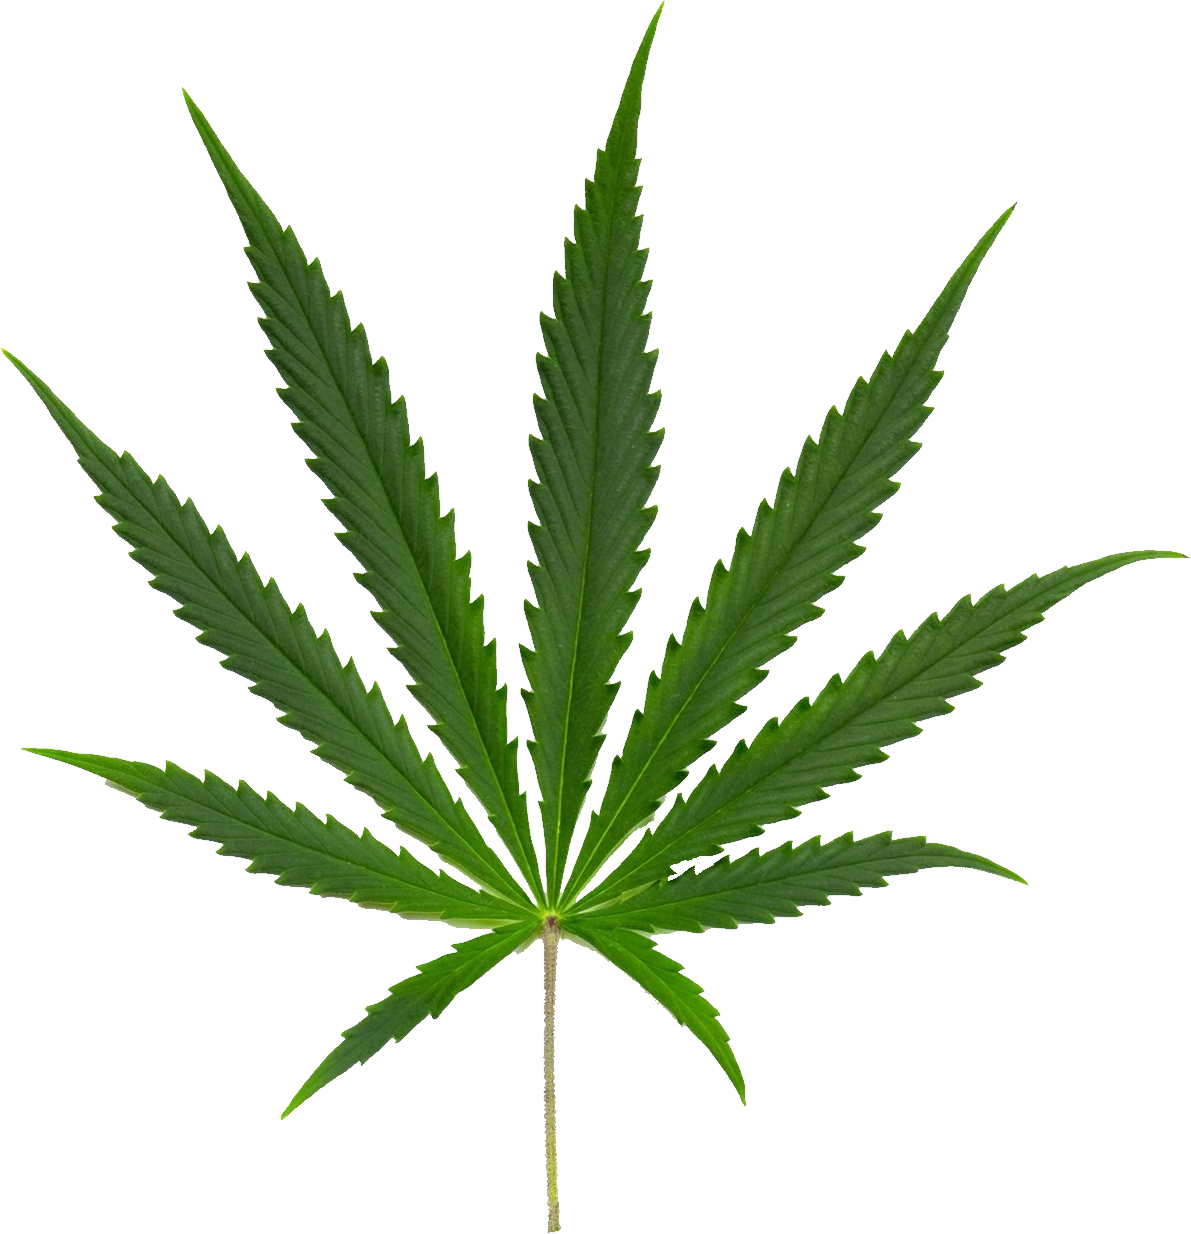 Cannabis image purepng free. Smoke weed png